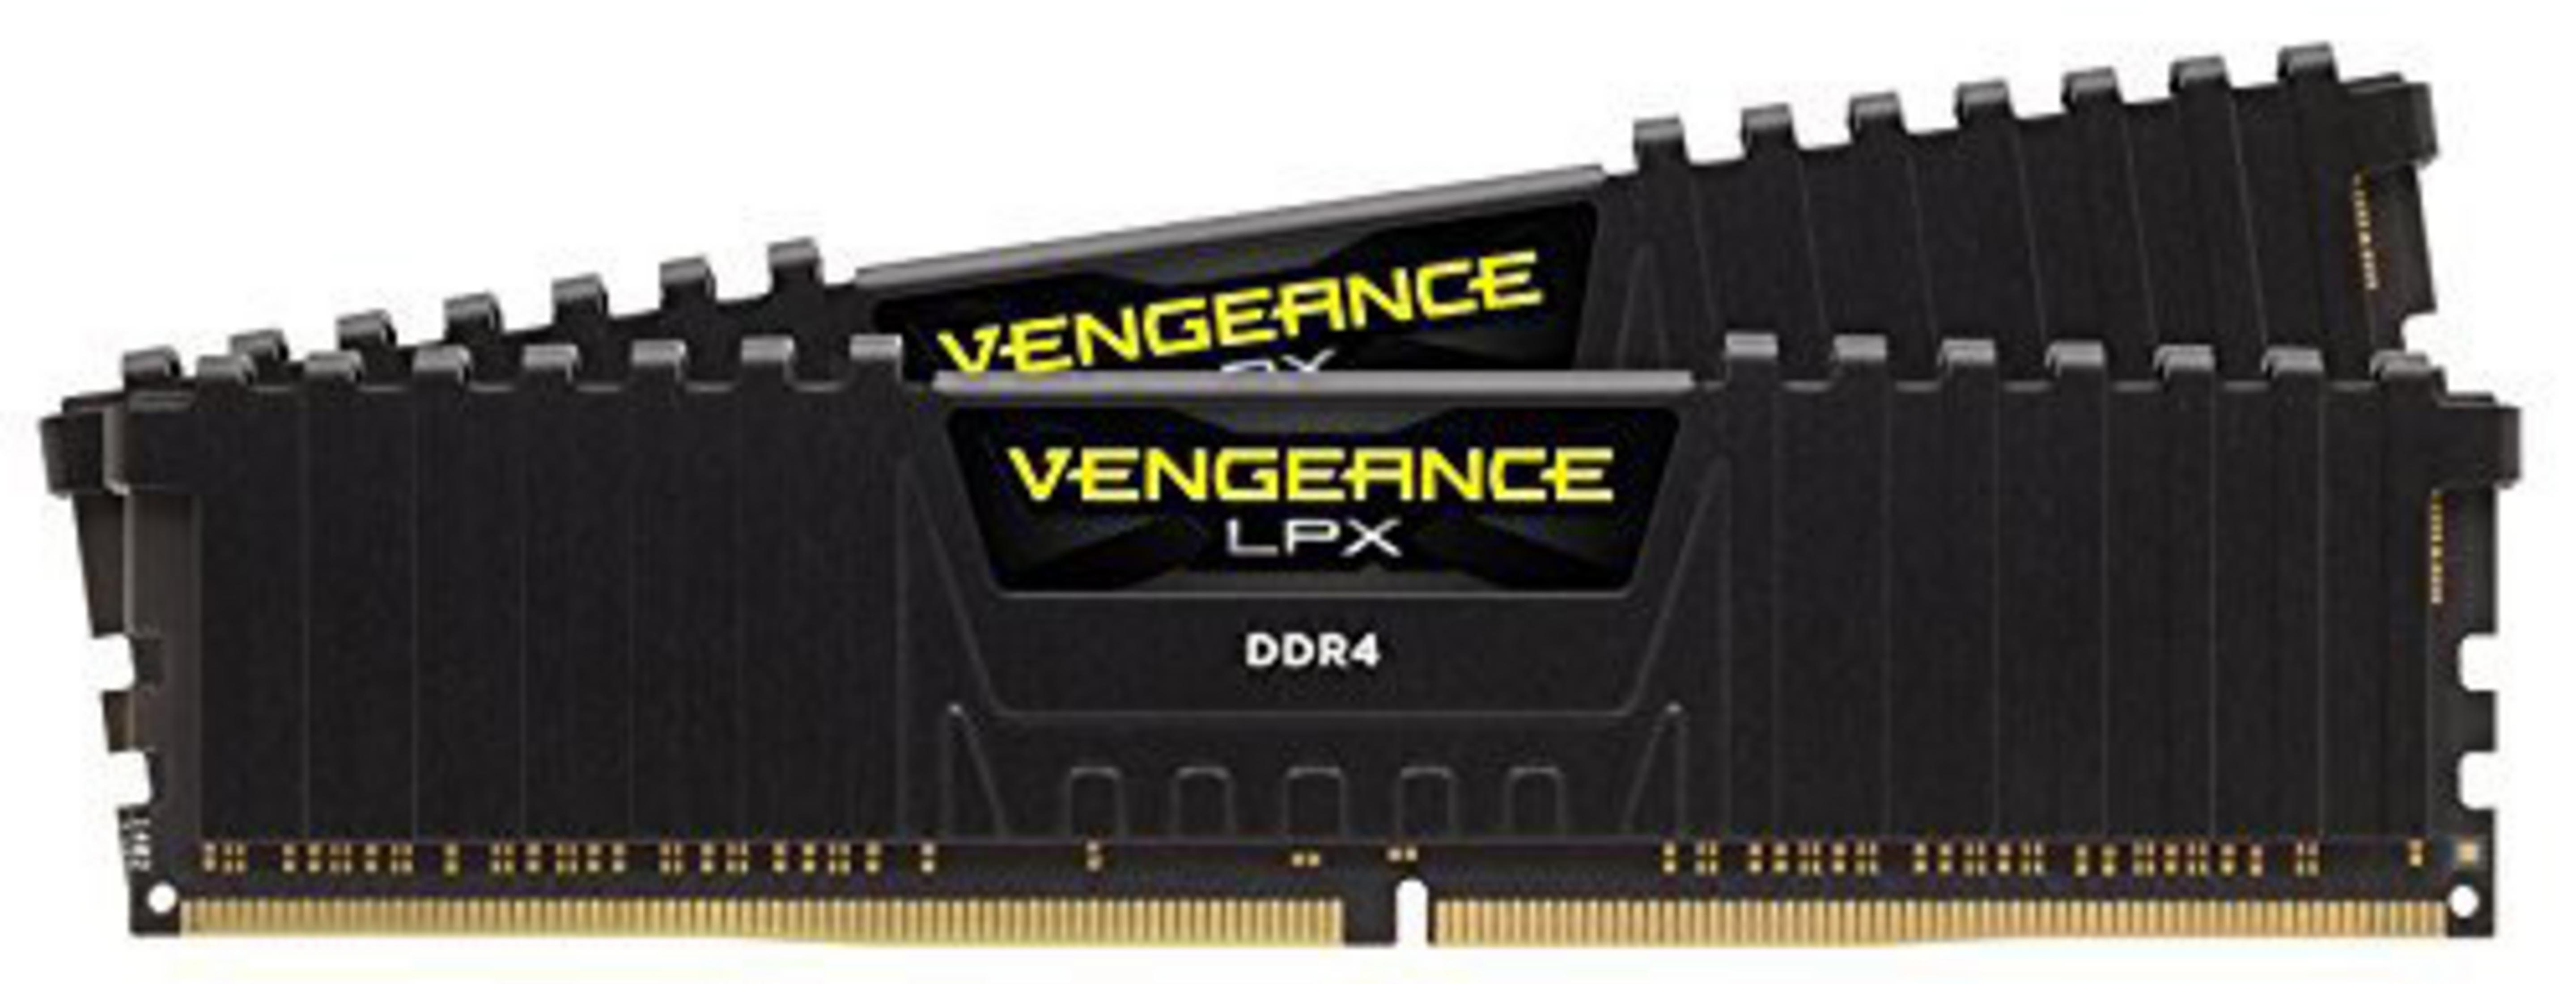 LPX 16 DDR4 Arbeitsspeicher VENGEANCE 2400MHZ DDR4 GB CMK16GX4M2A2400C14 16GB CORSAIR